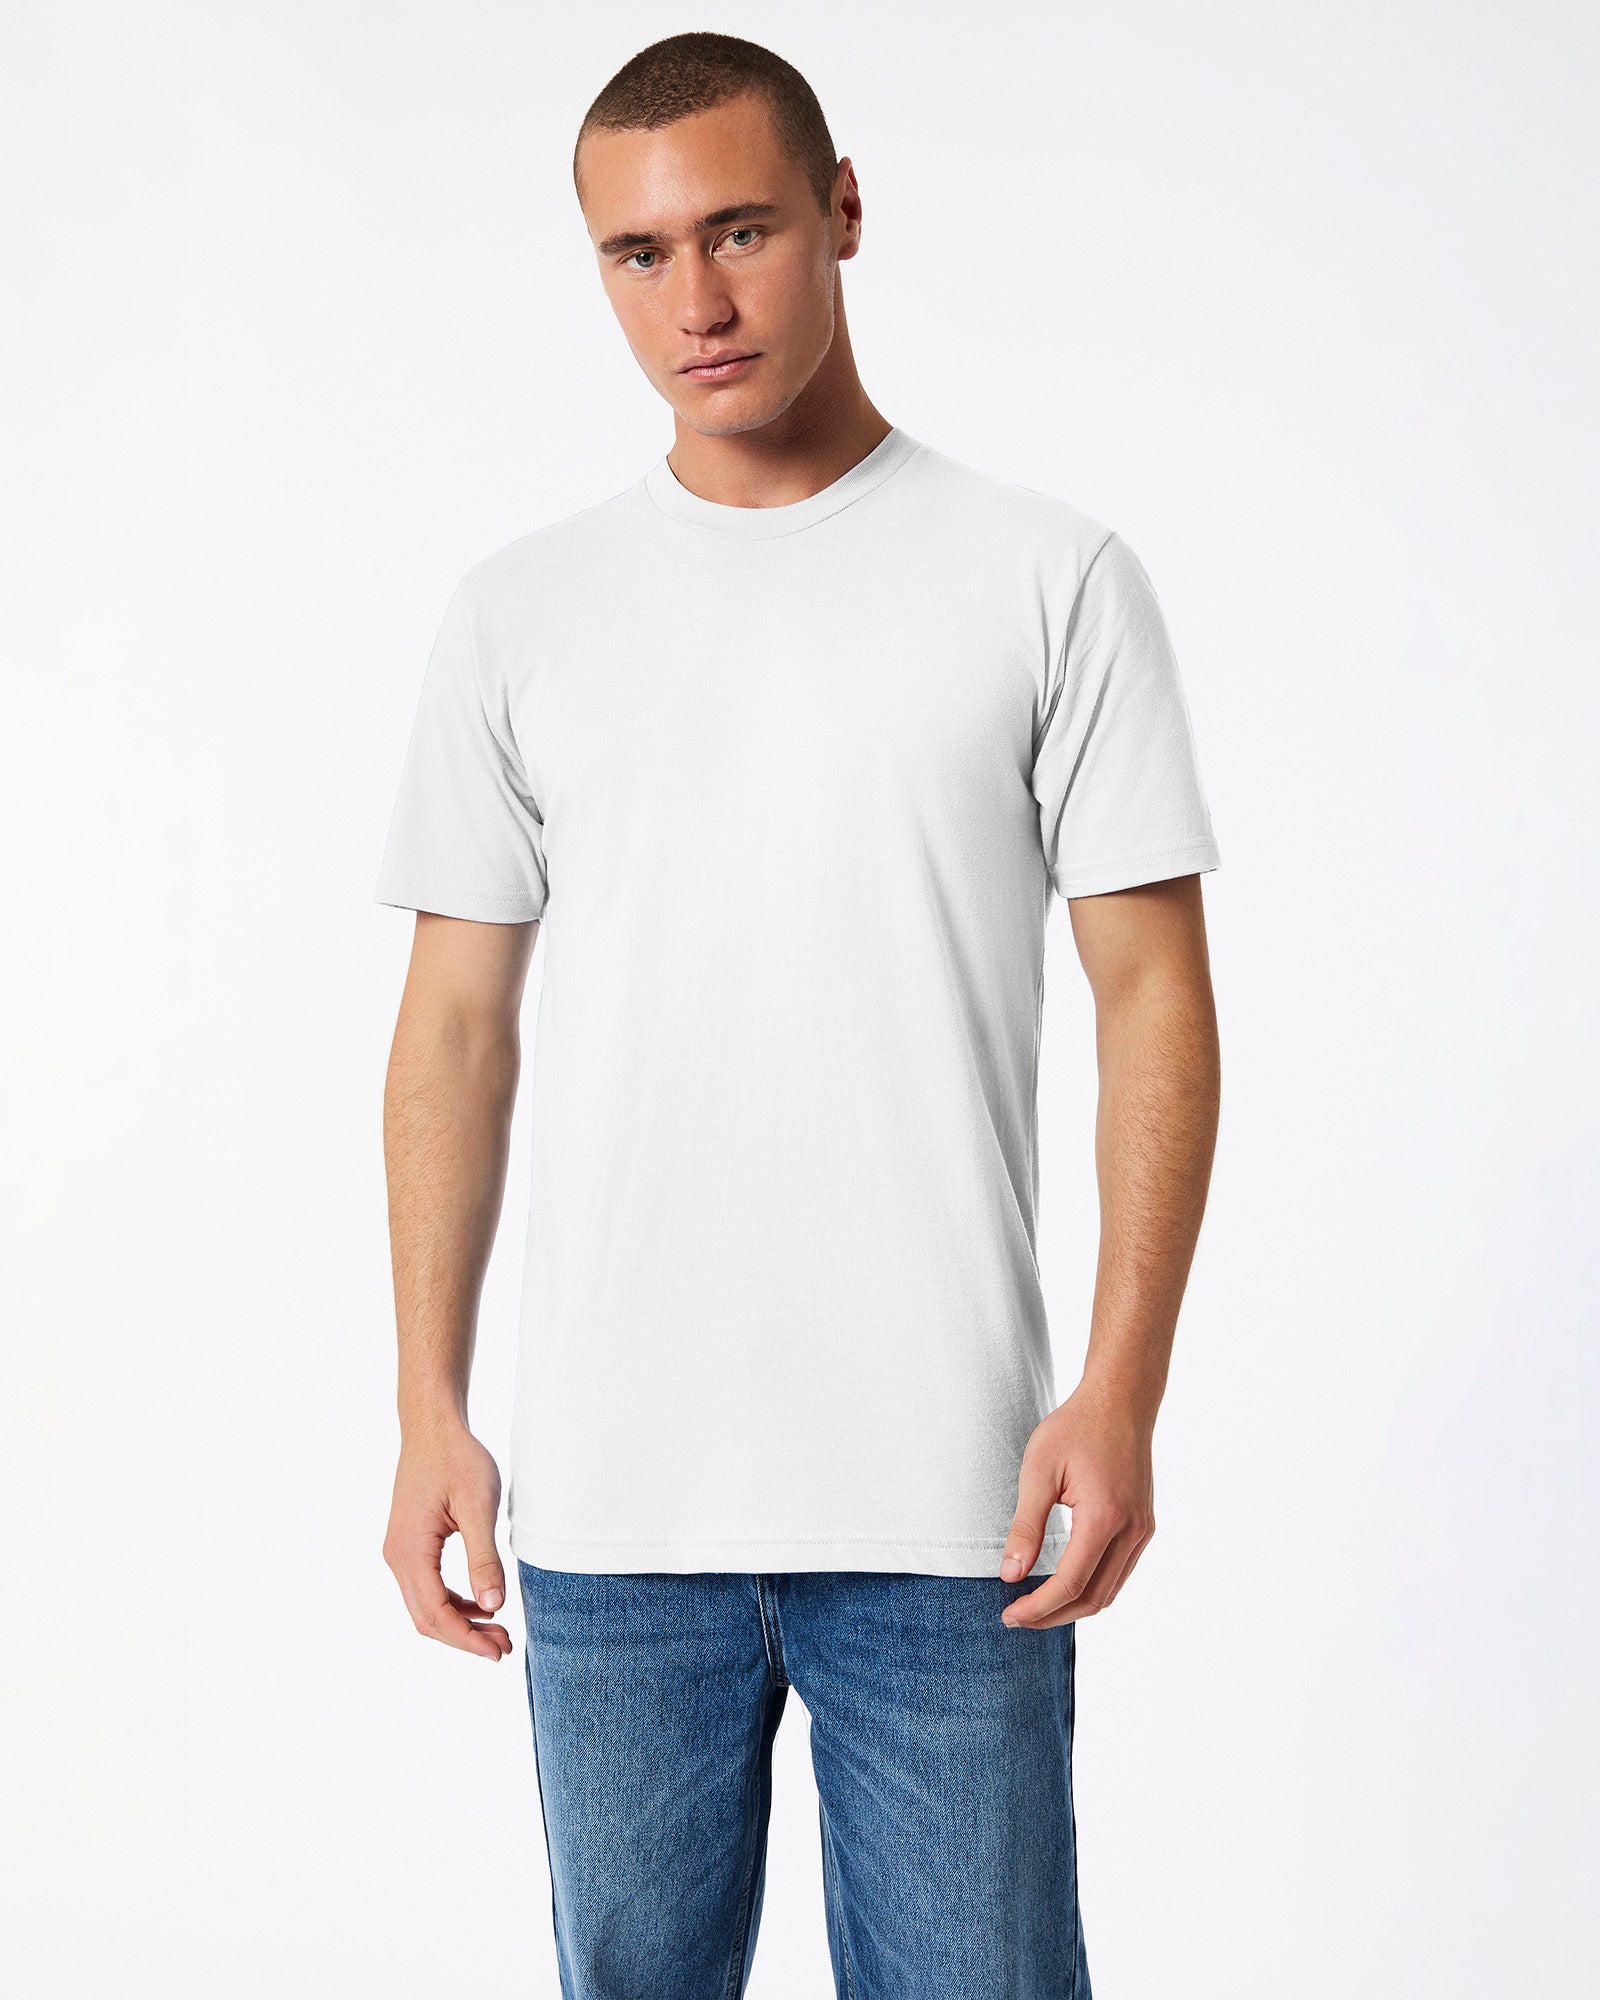 Fine Jersey Unisex Short Sleeve T-Shirt - White